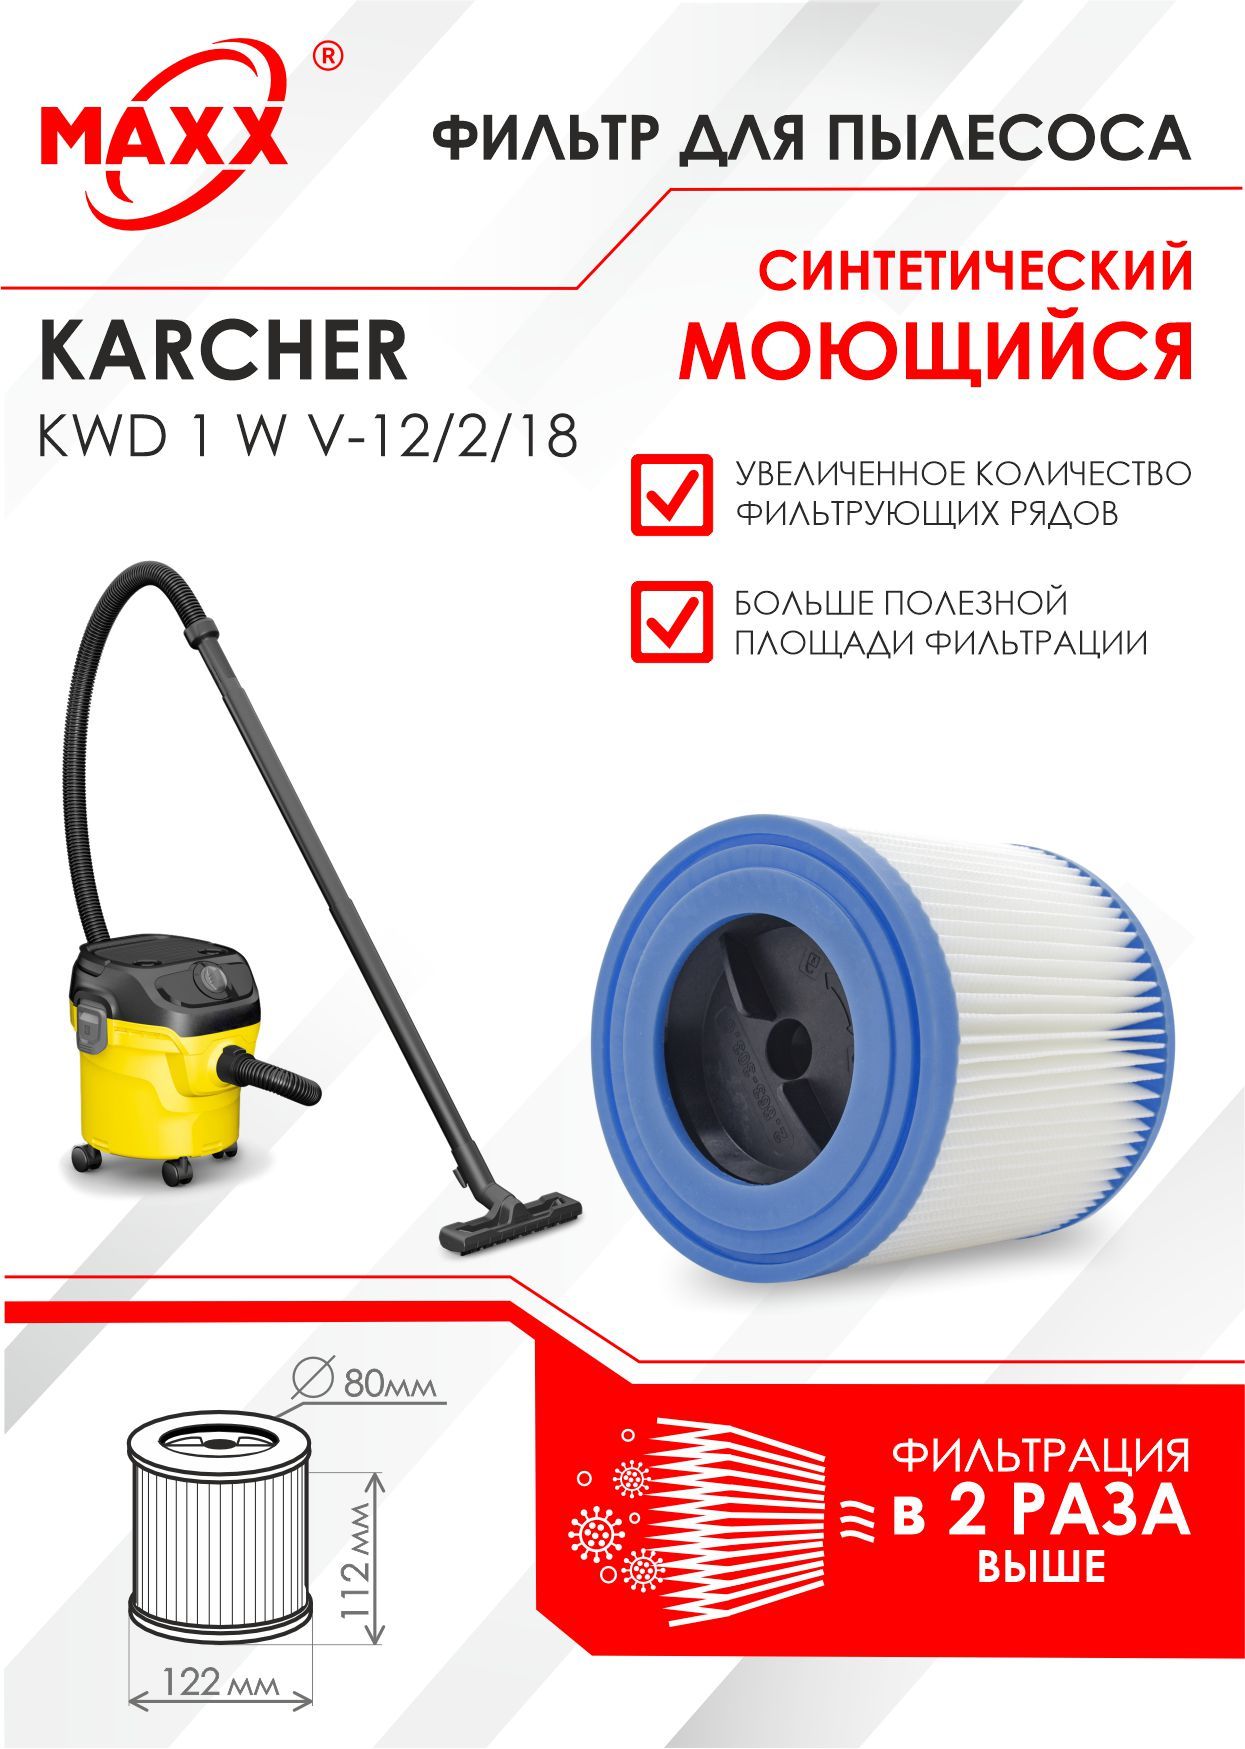 Kärcher KWD 1 W-12/2/18 - Vacuum cleaners 